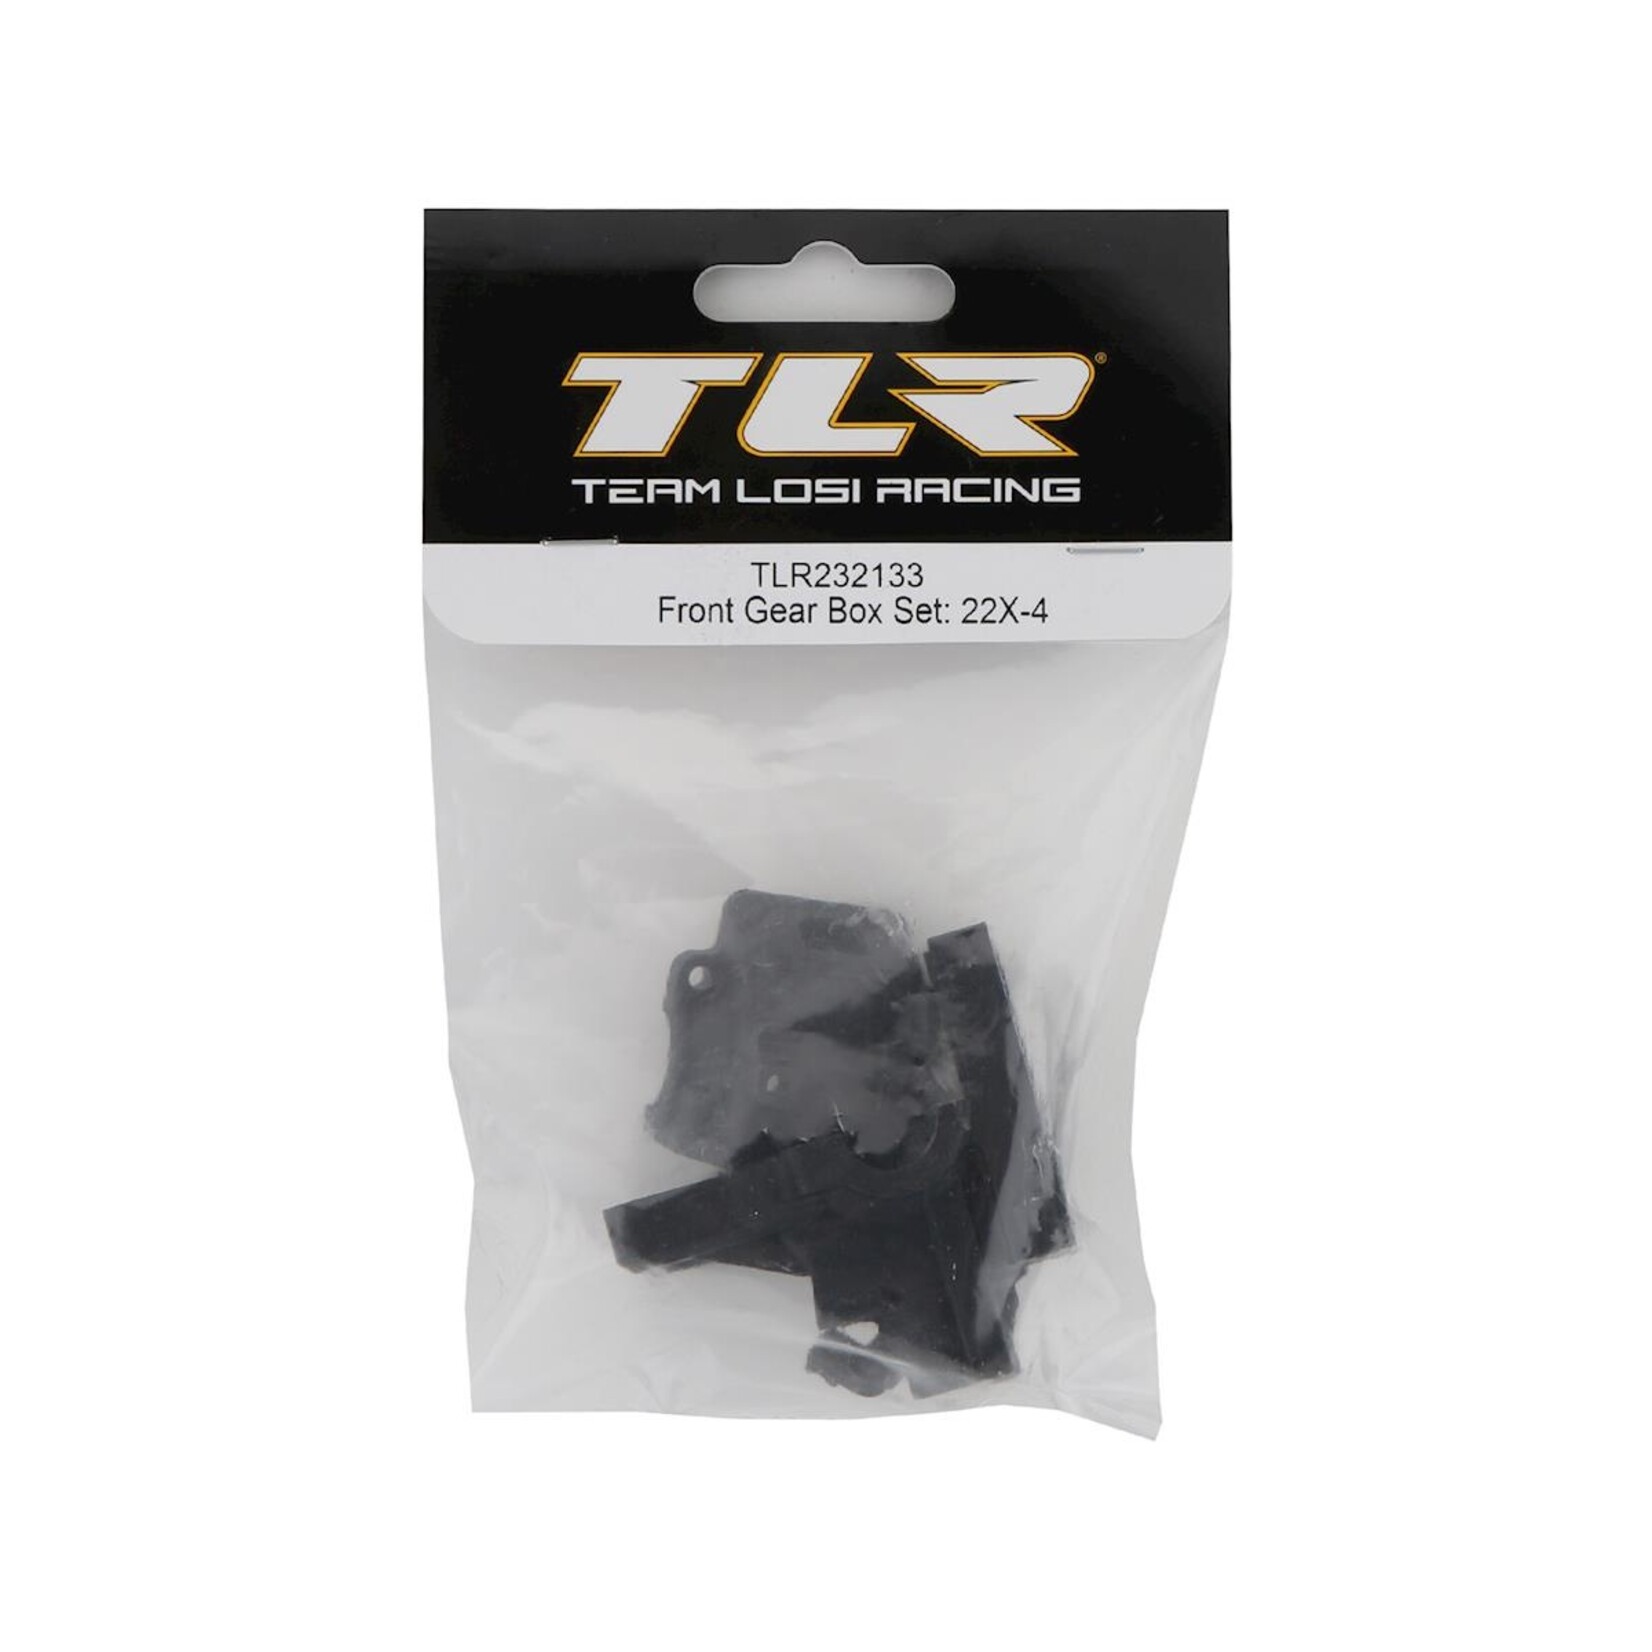 TLR Team Losi Racing 22X-4 Front Gear Box Set #TLR232133